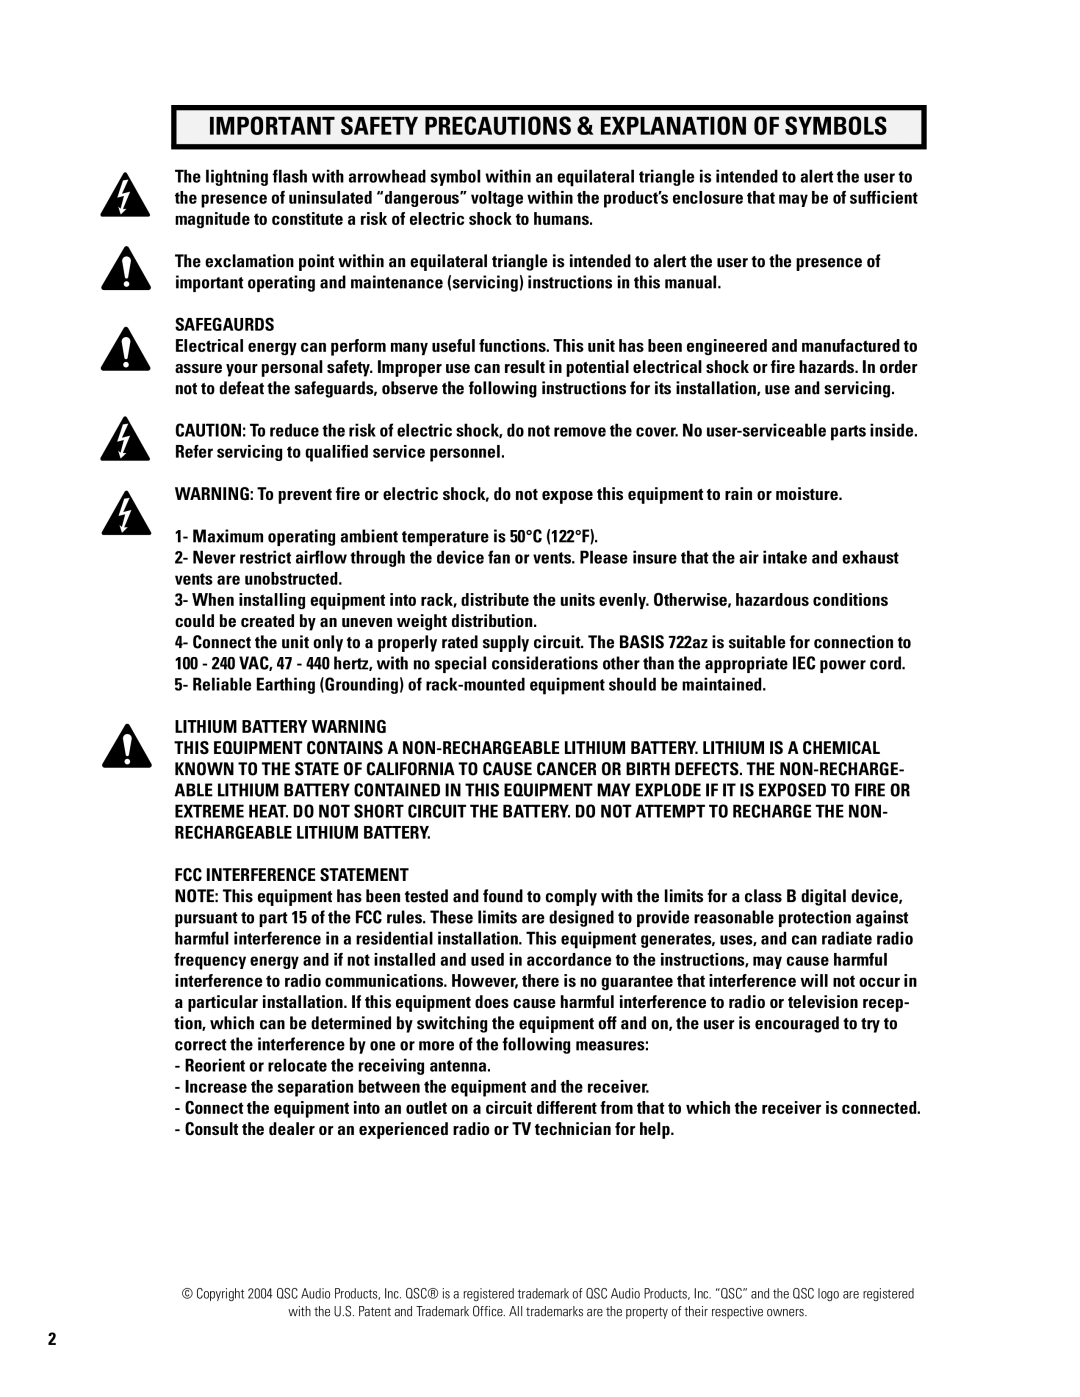 QSC Audio 722az manual Safegaurds, Lithium Battery Warning, Fcc Interference Statement 